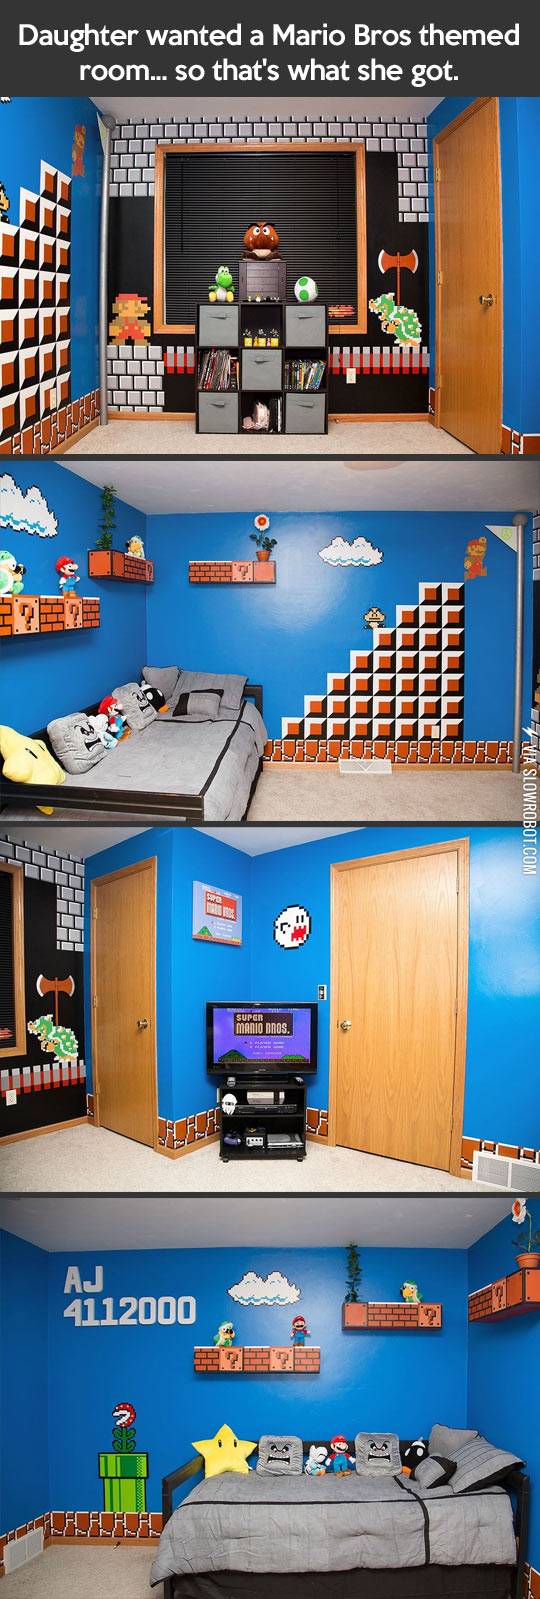 A+Mario+themed+bedroom